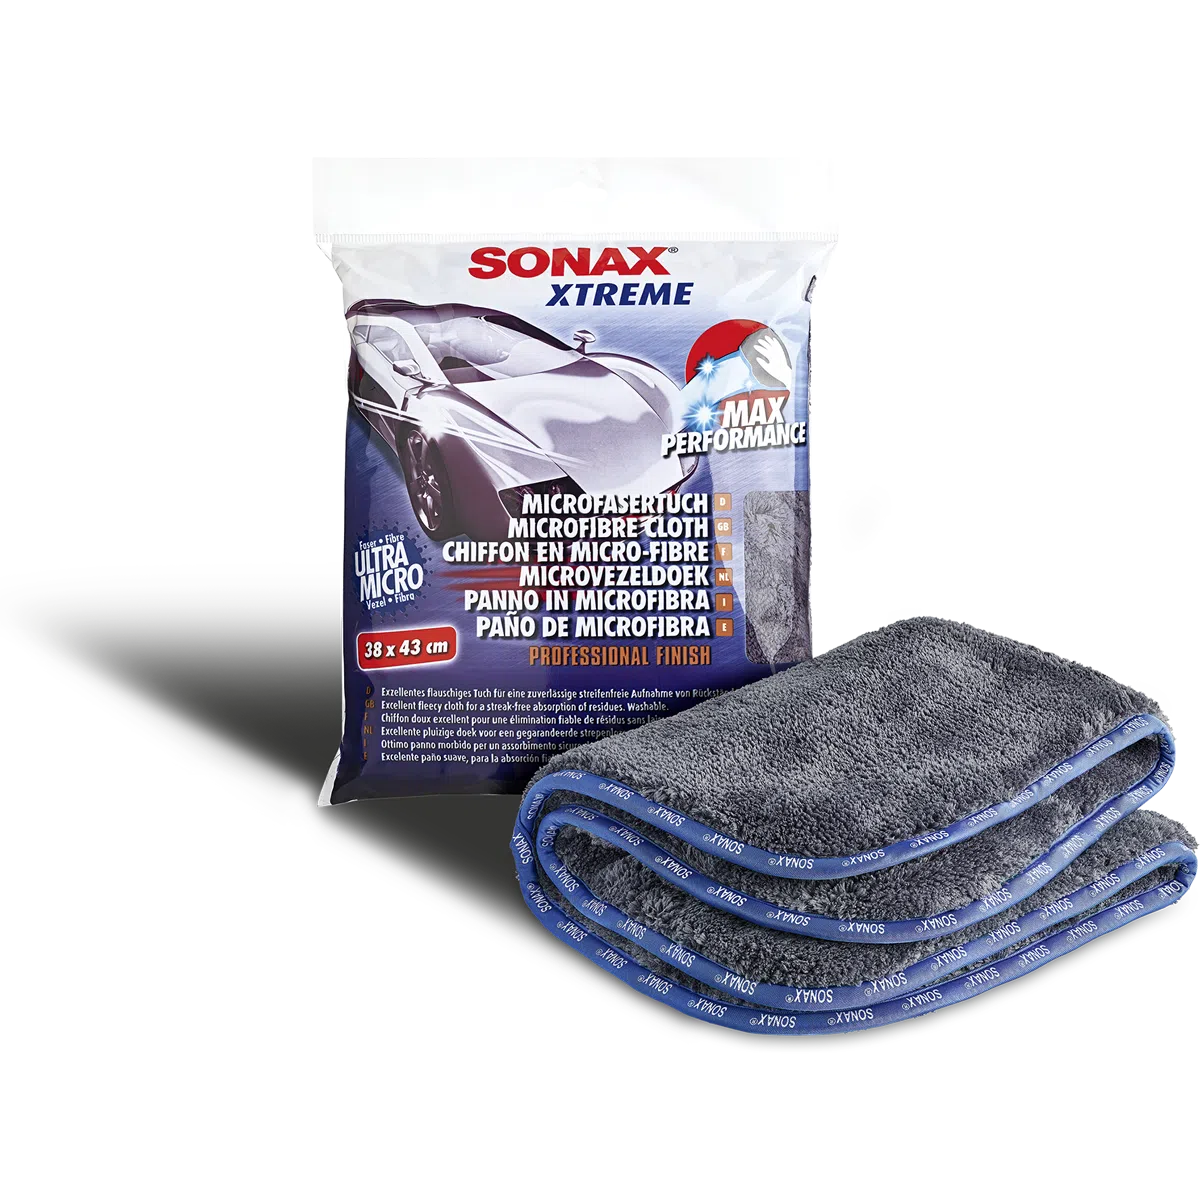 Sonax Xtreme Microfaser Tuch Professional Finish